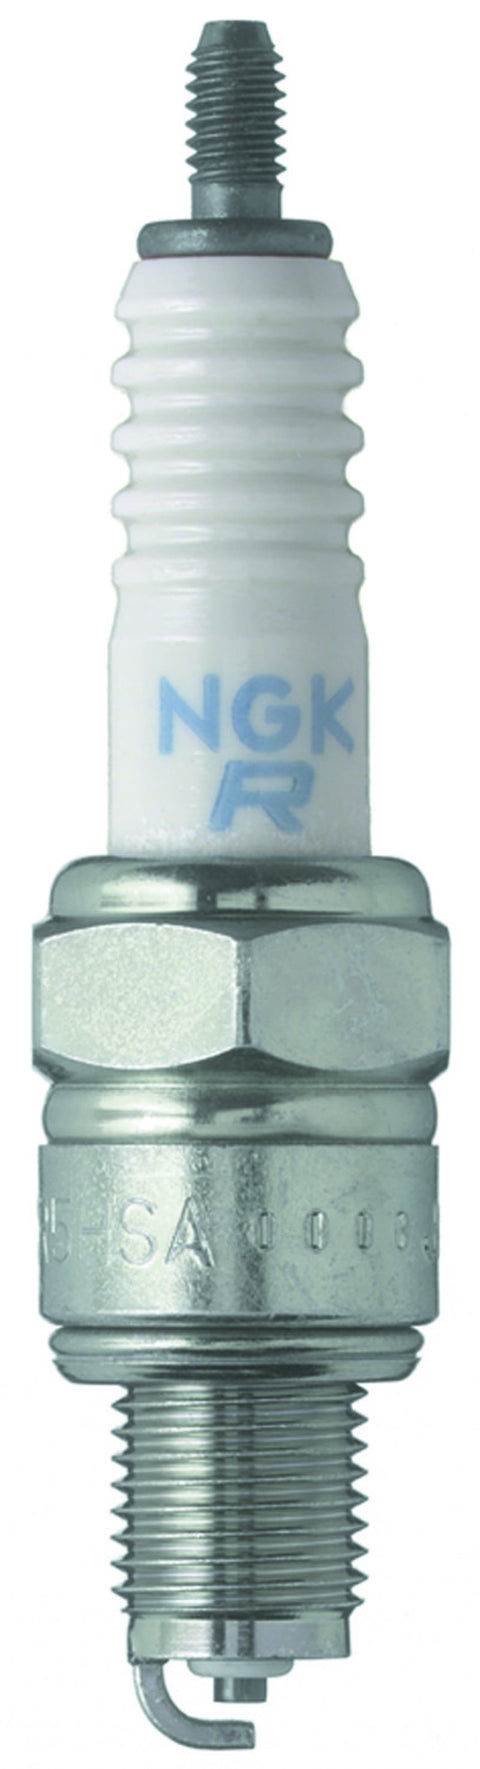 NGK Standard Spark Plug Box of 10 (2430)